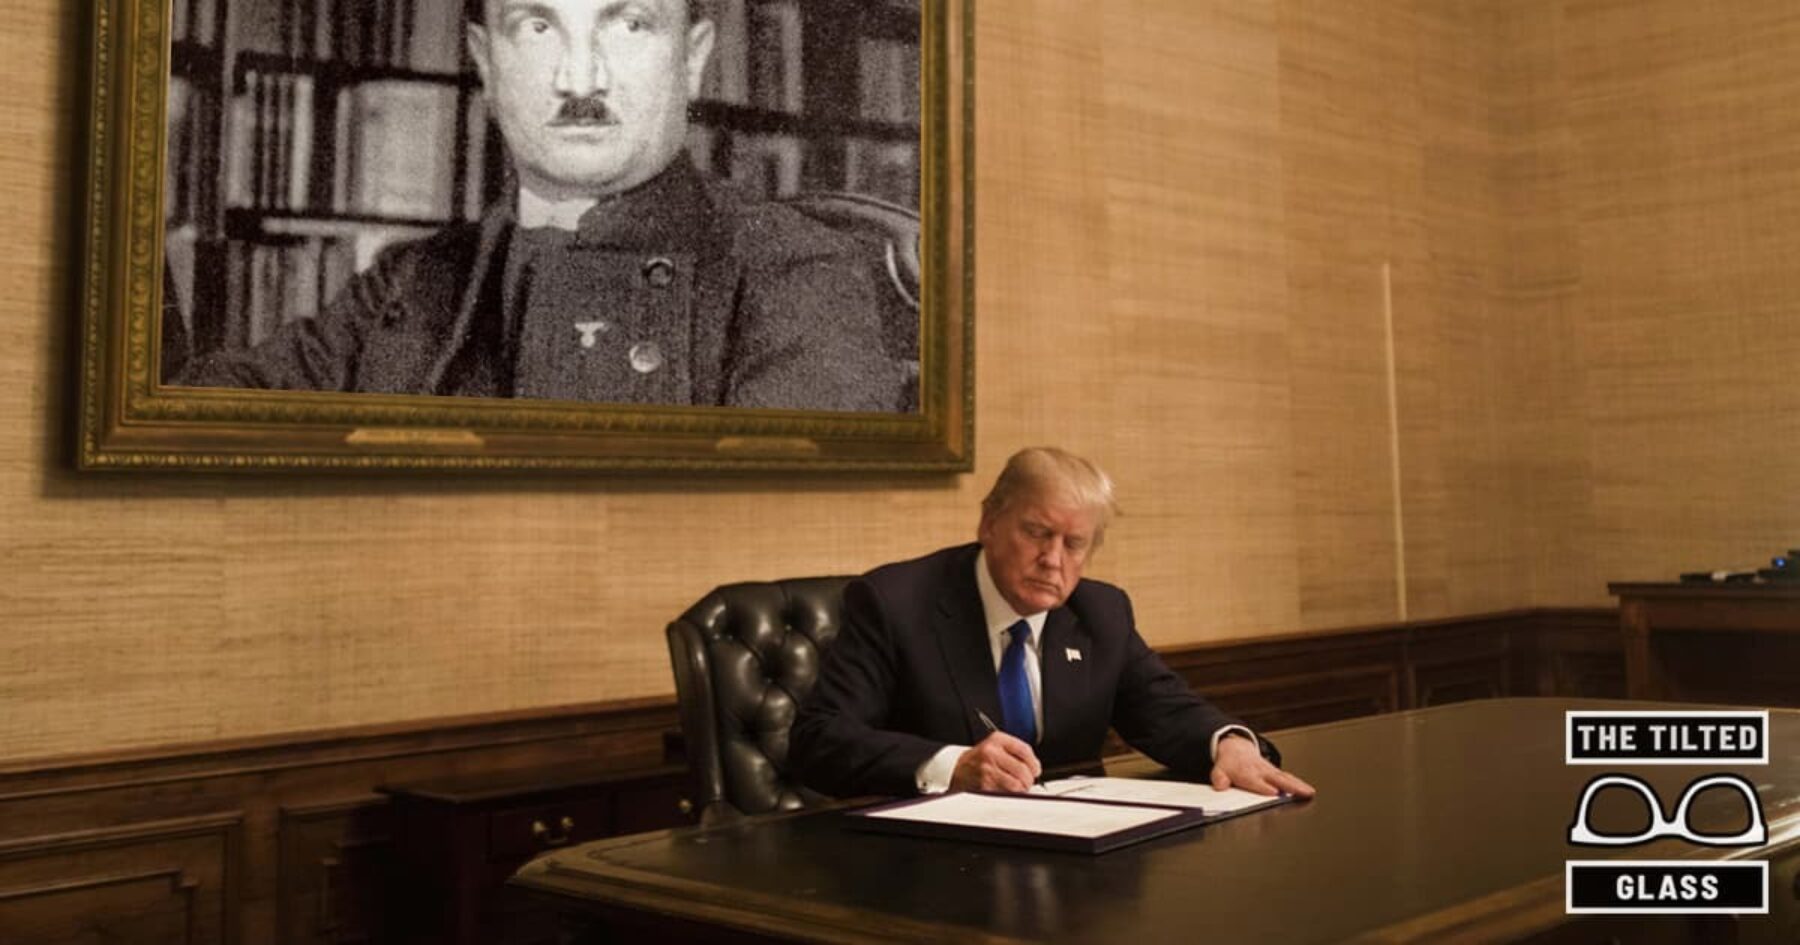 Report: Trump Is Very Smart, Is a Scholar of Martin Heidegger